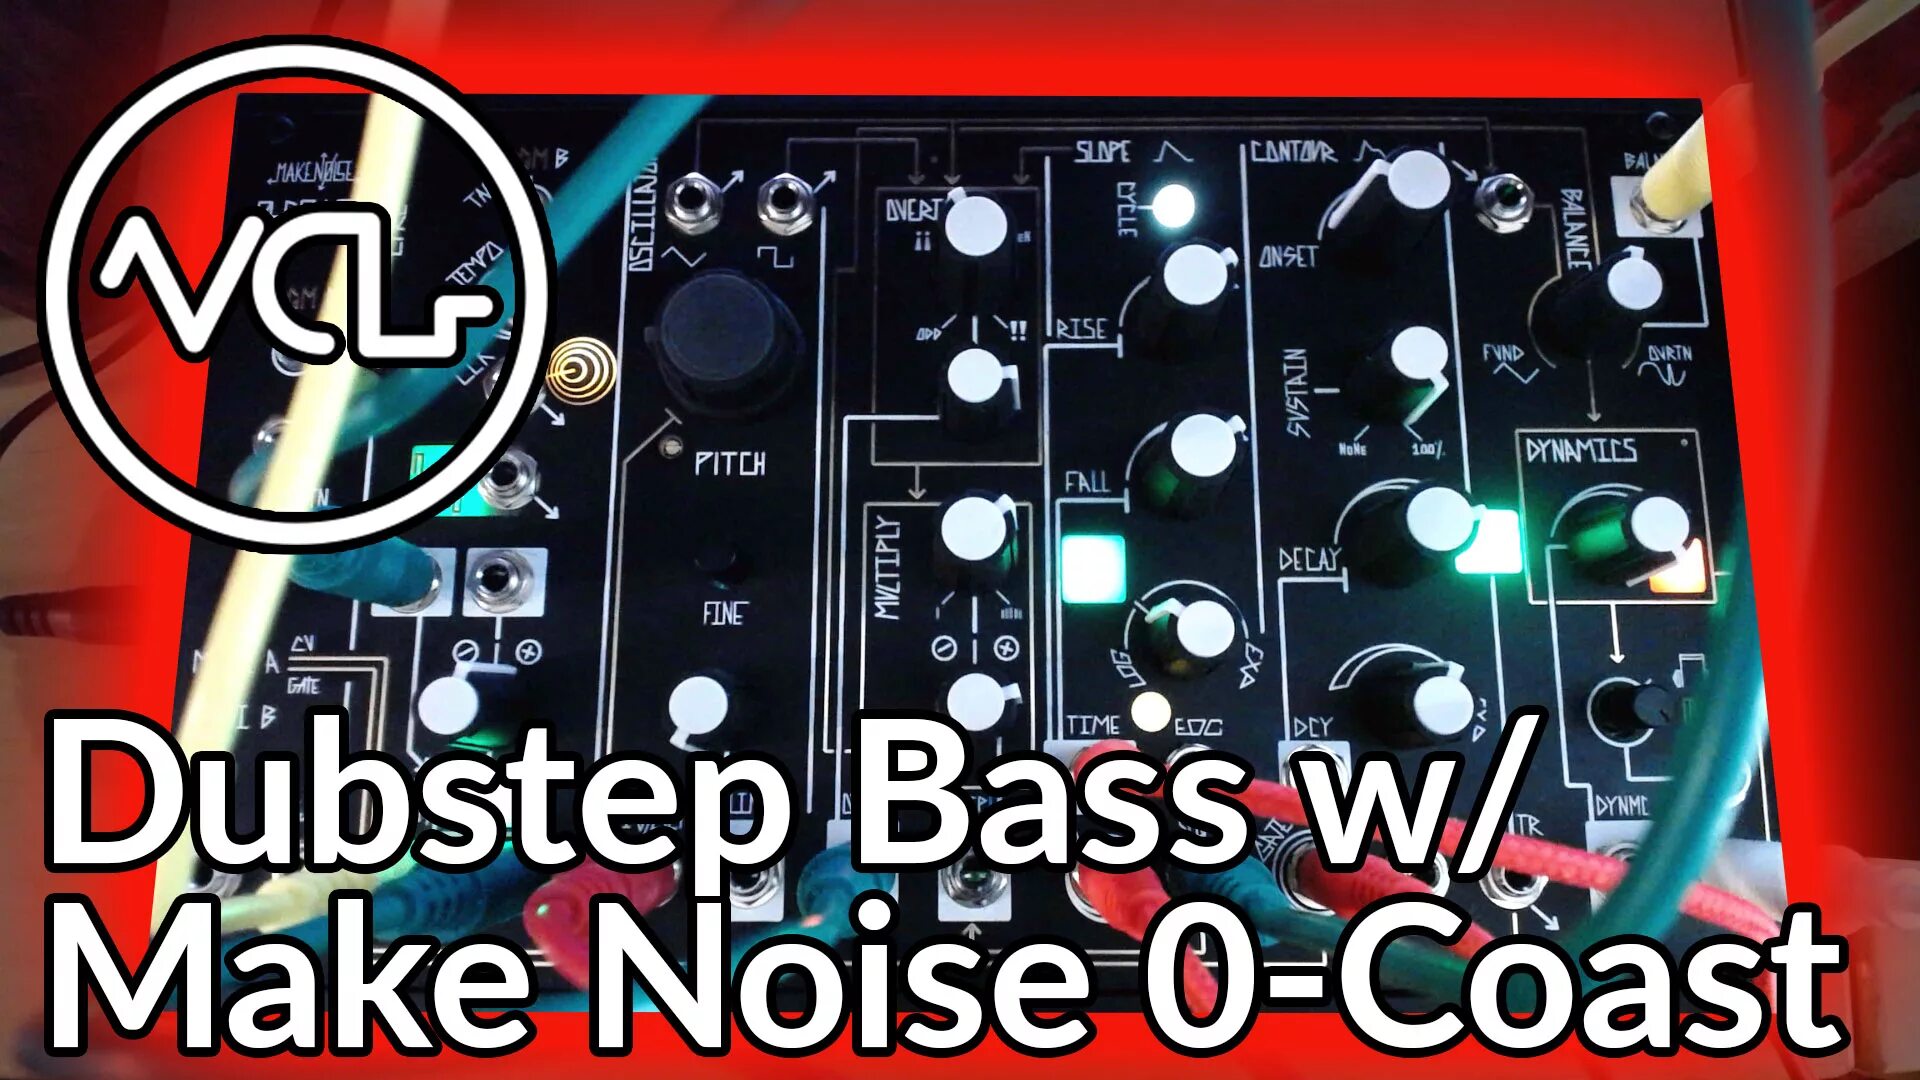 Make Noise 0-Coast. 0 Coast make Noise Patches. Make Noise Synth. Dubstep bass